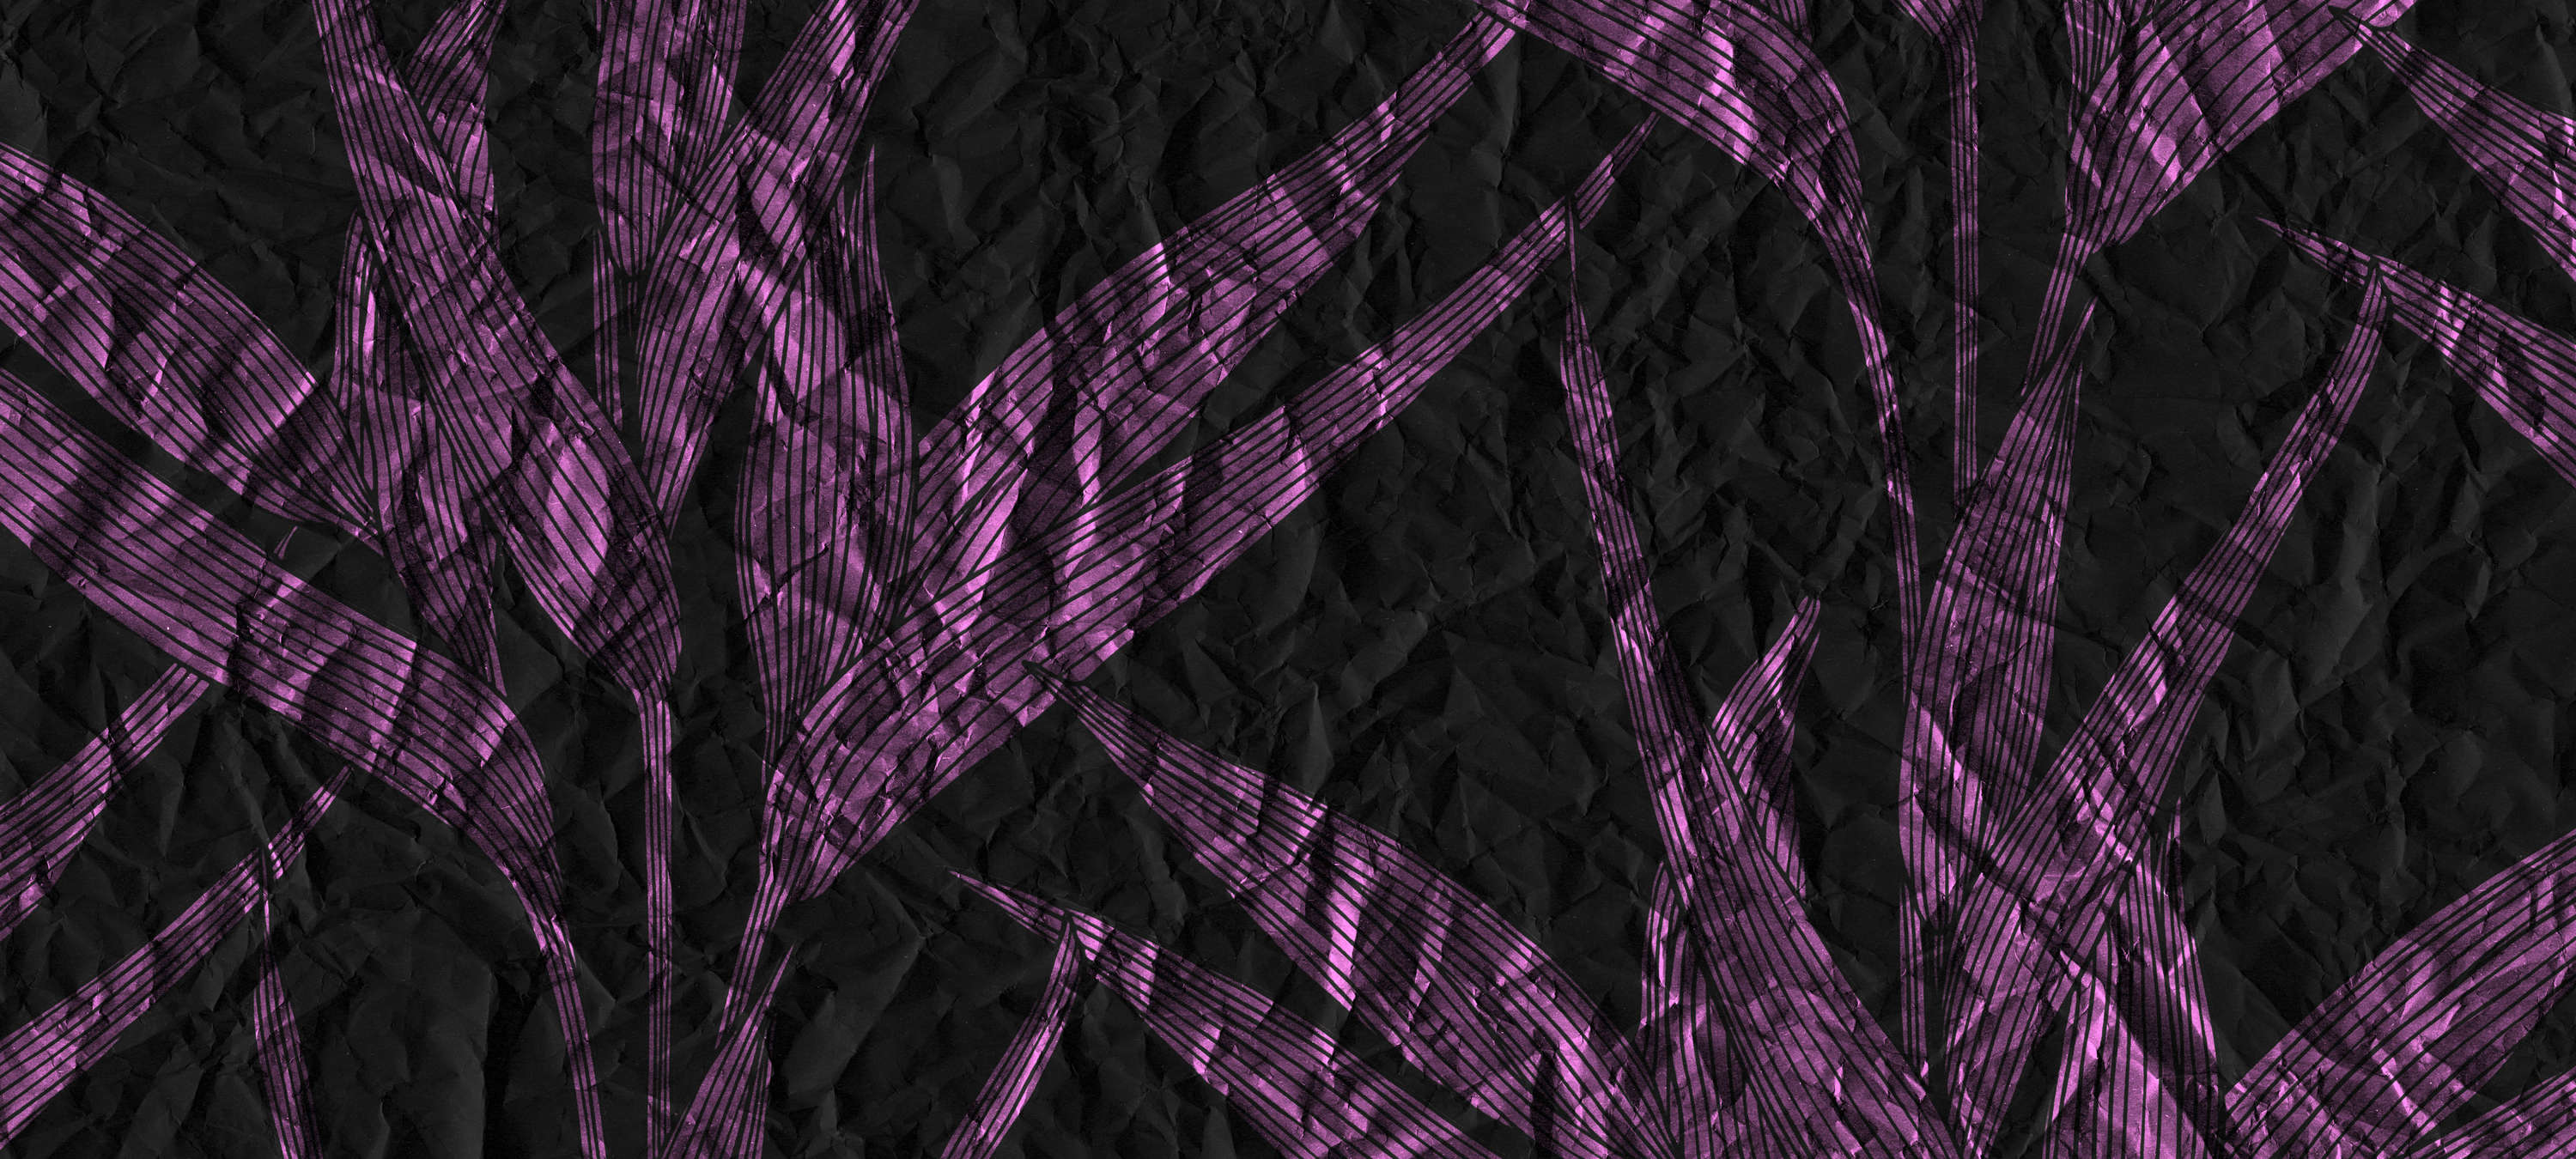             Dark Wallpaper Leaves & Paper Optics - Paars, Zwart
        